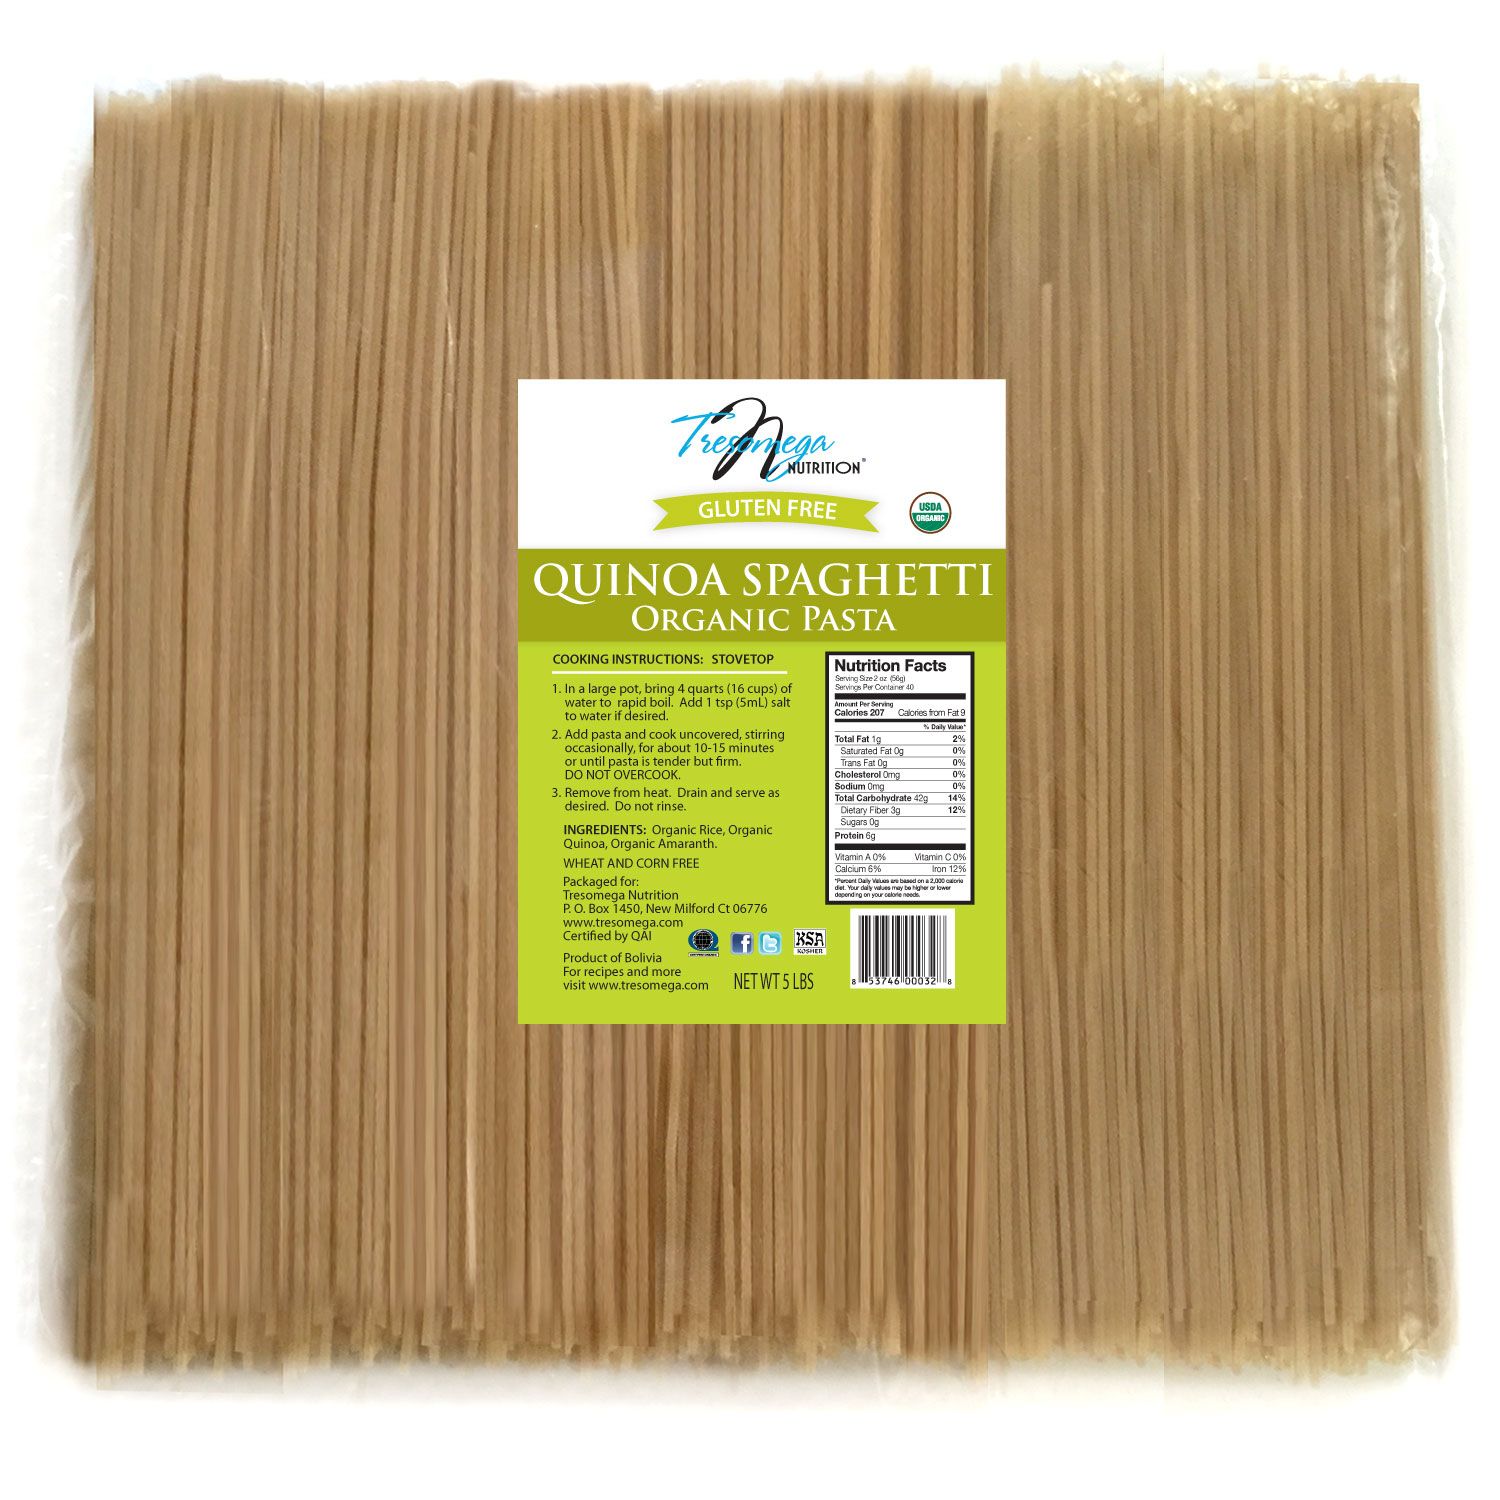 Tresomega Nutrition Organic Quinoa Spaghetti, 5-Pound